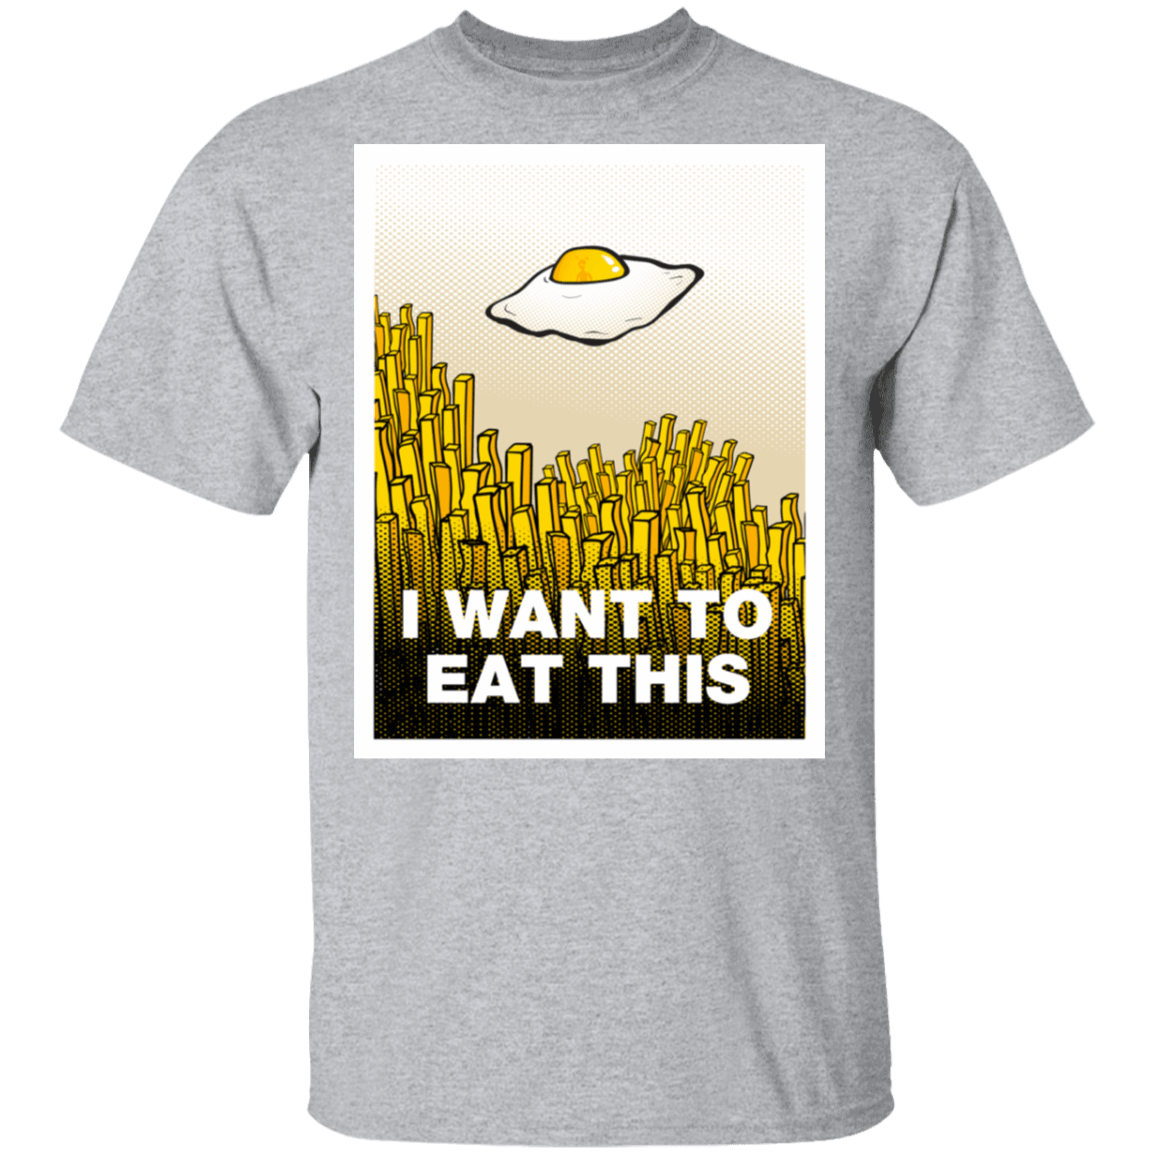 T-Shirts Sport Grey / S Egg Files T-Shirt